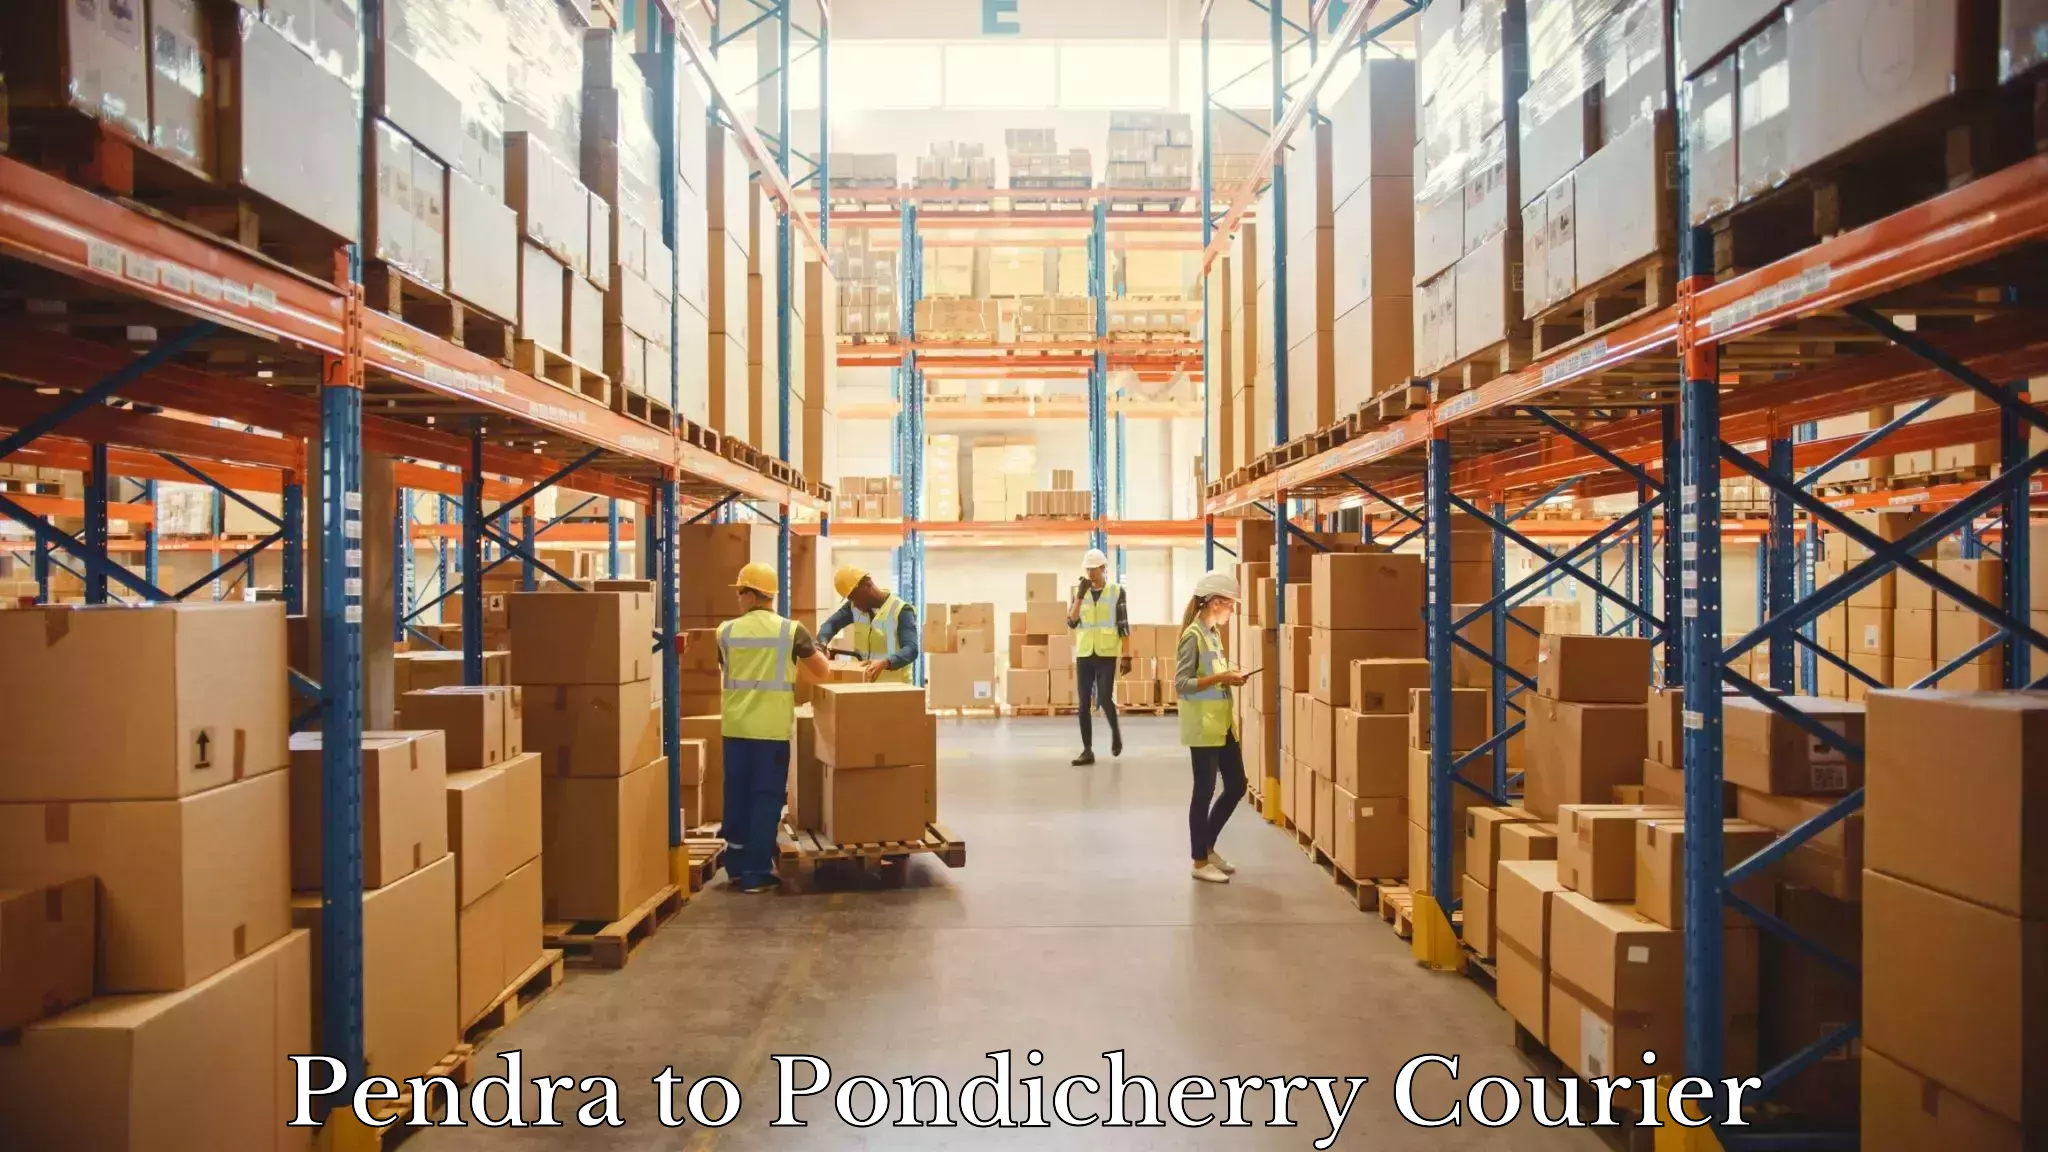 24/7 courier service Pendra to Pondicherry